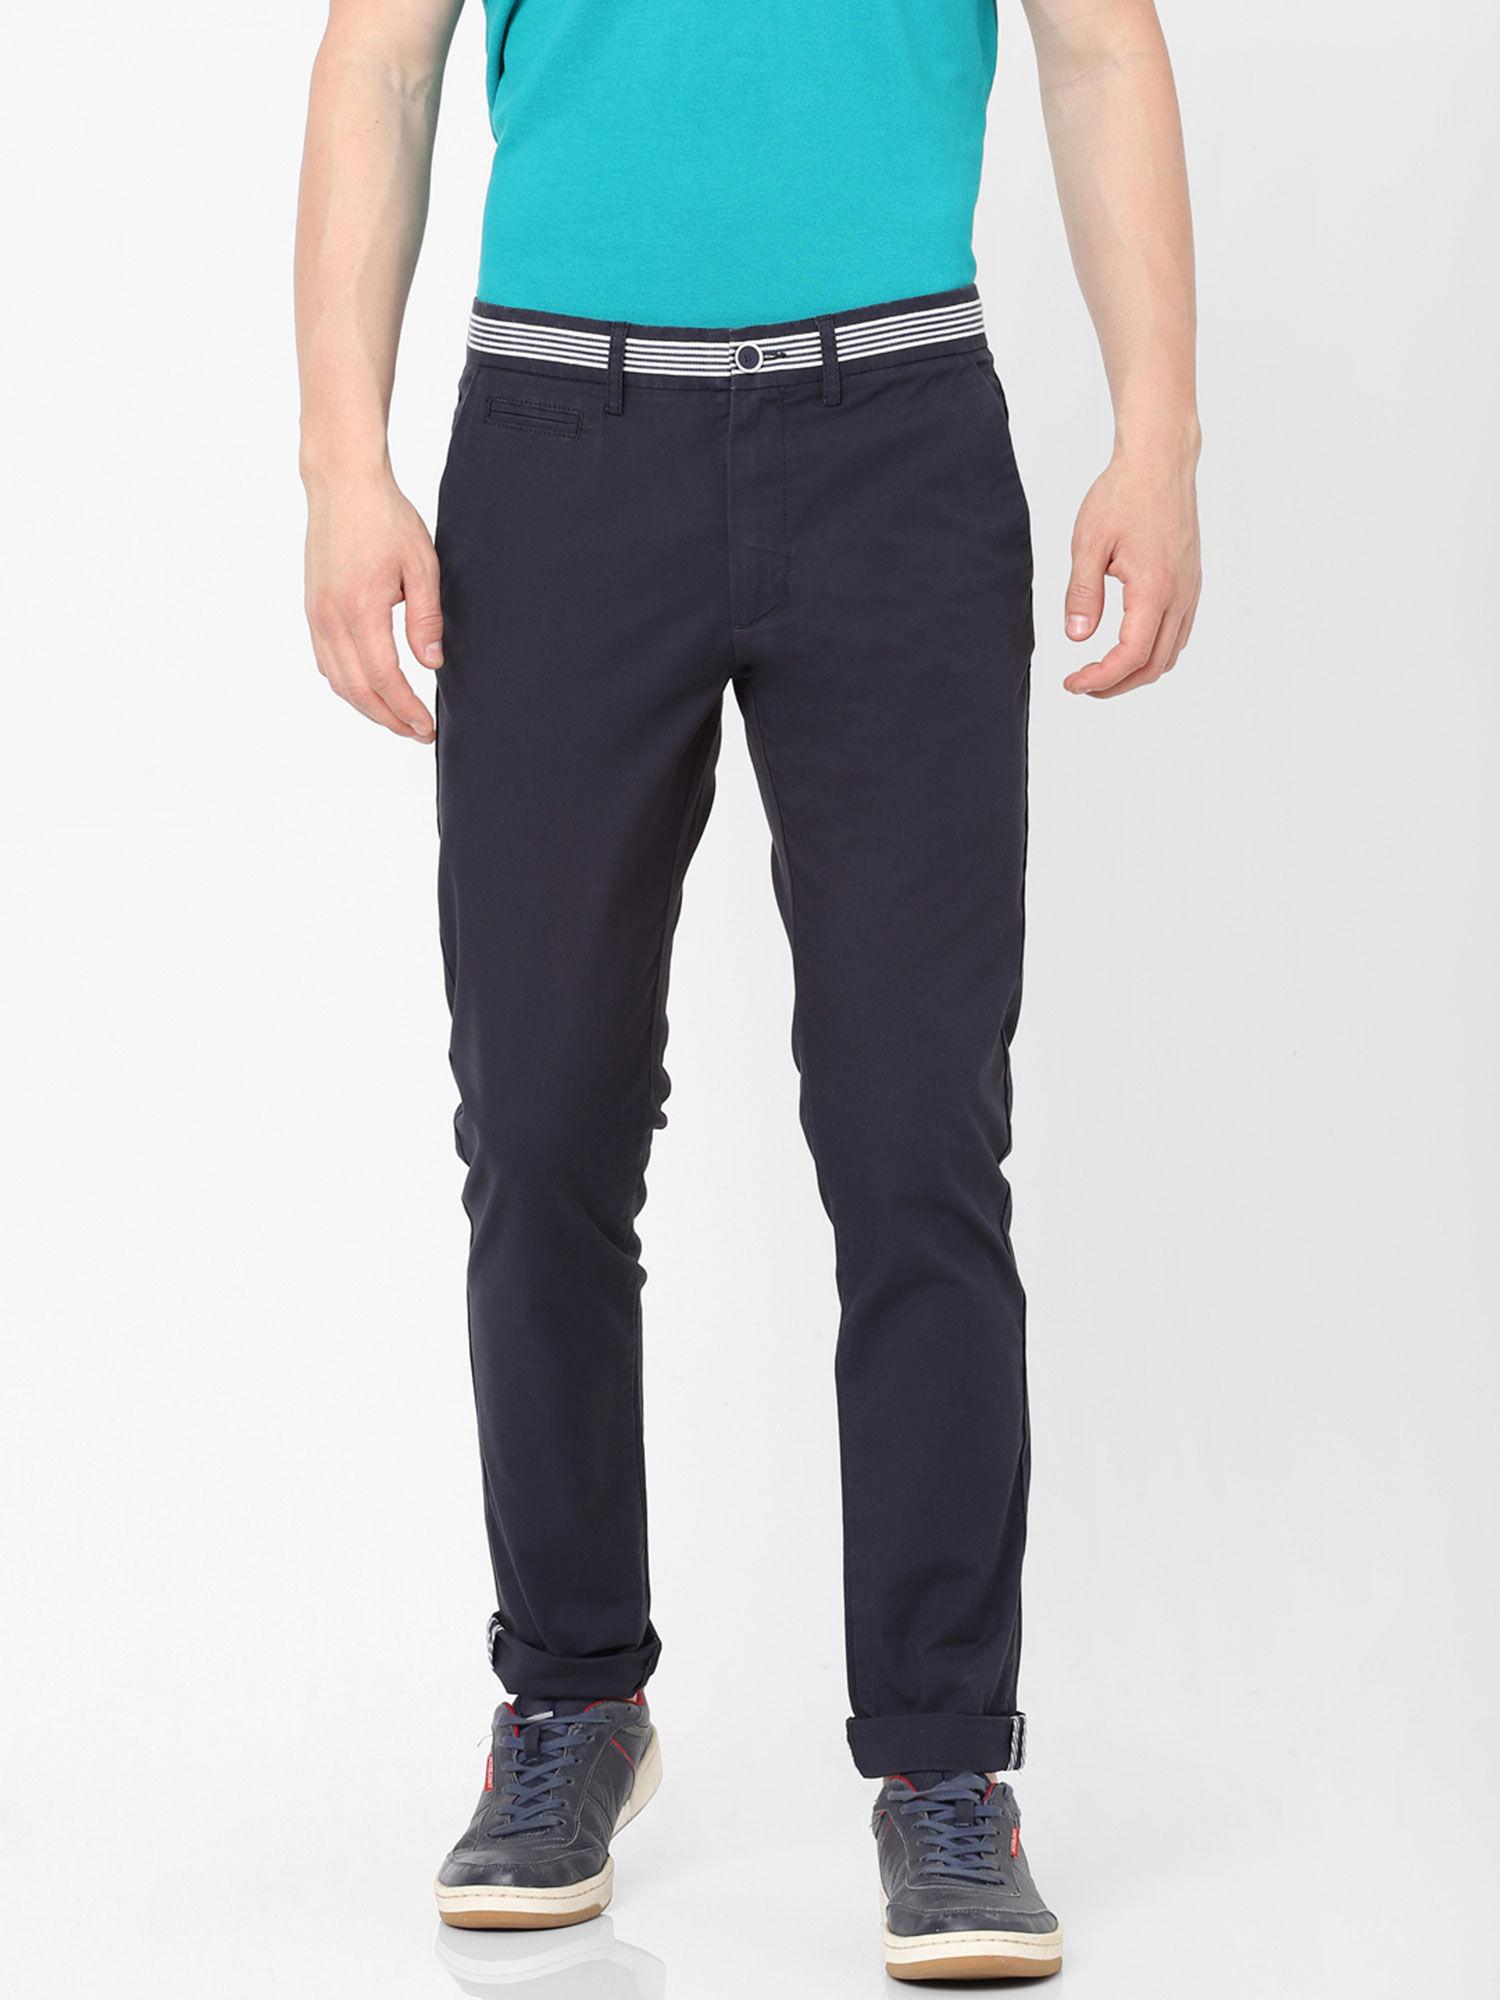 navy blue pant